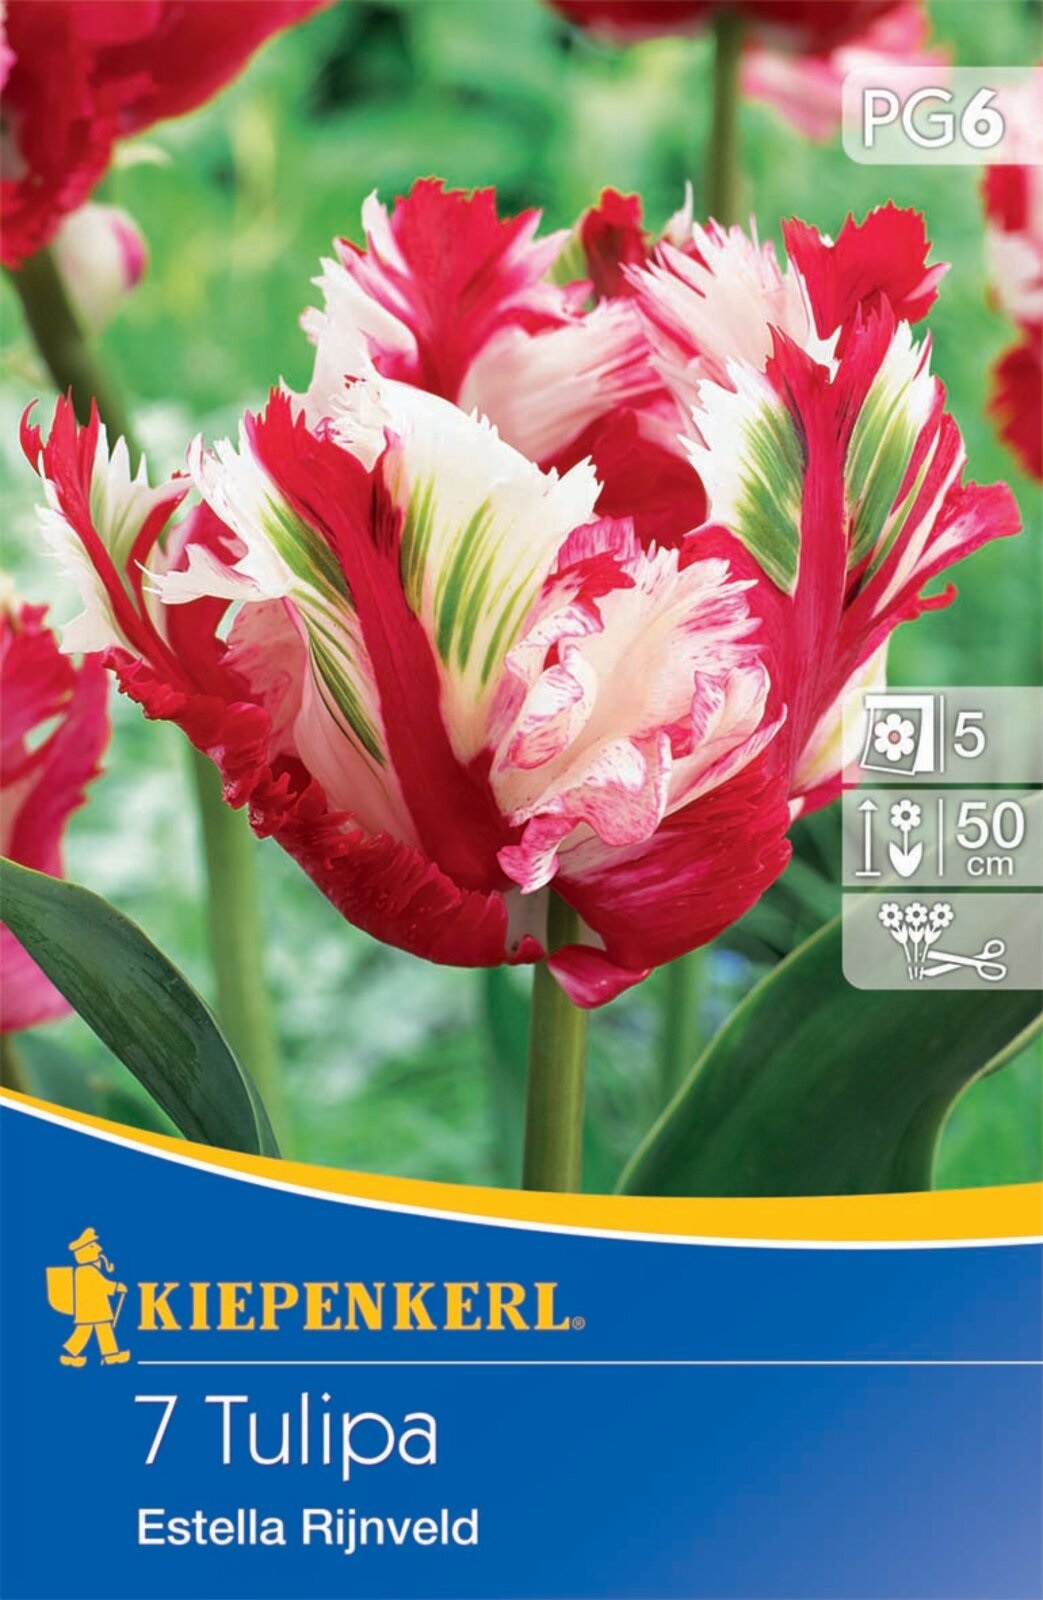 Tulip with parrot flower Estella Rijnveld 7 pcs Kiepenkerl